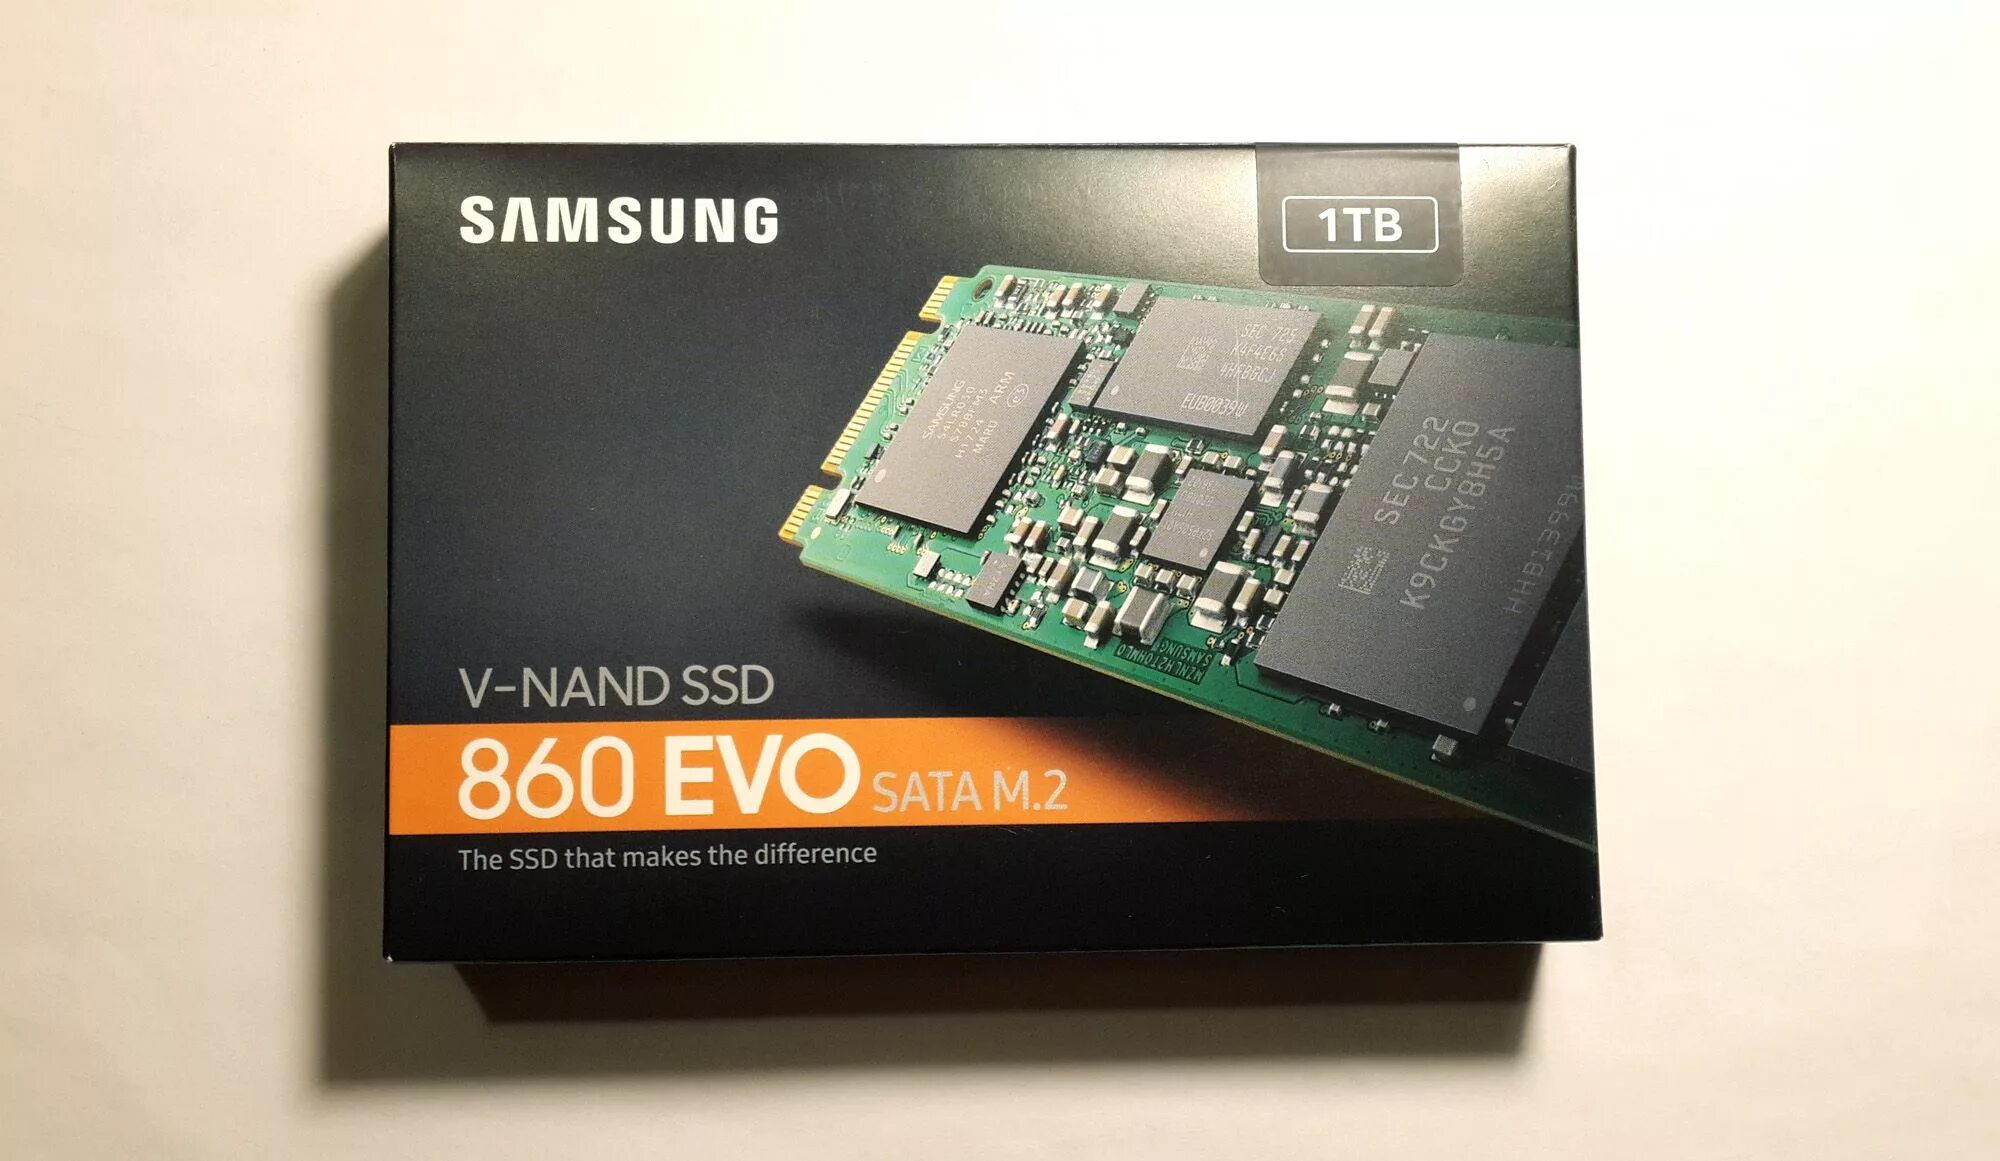 Samsung ssd 860 evo купить. SSD m2 Samsung 860 EVO. SSD Samsung 860 m2. Samsung EVO 860 1tb m2. SSD m2 Samsung 1tb 860 EVO [MZ-n6e1t0bw].